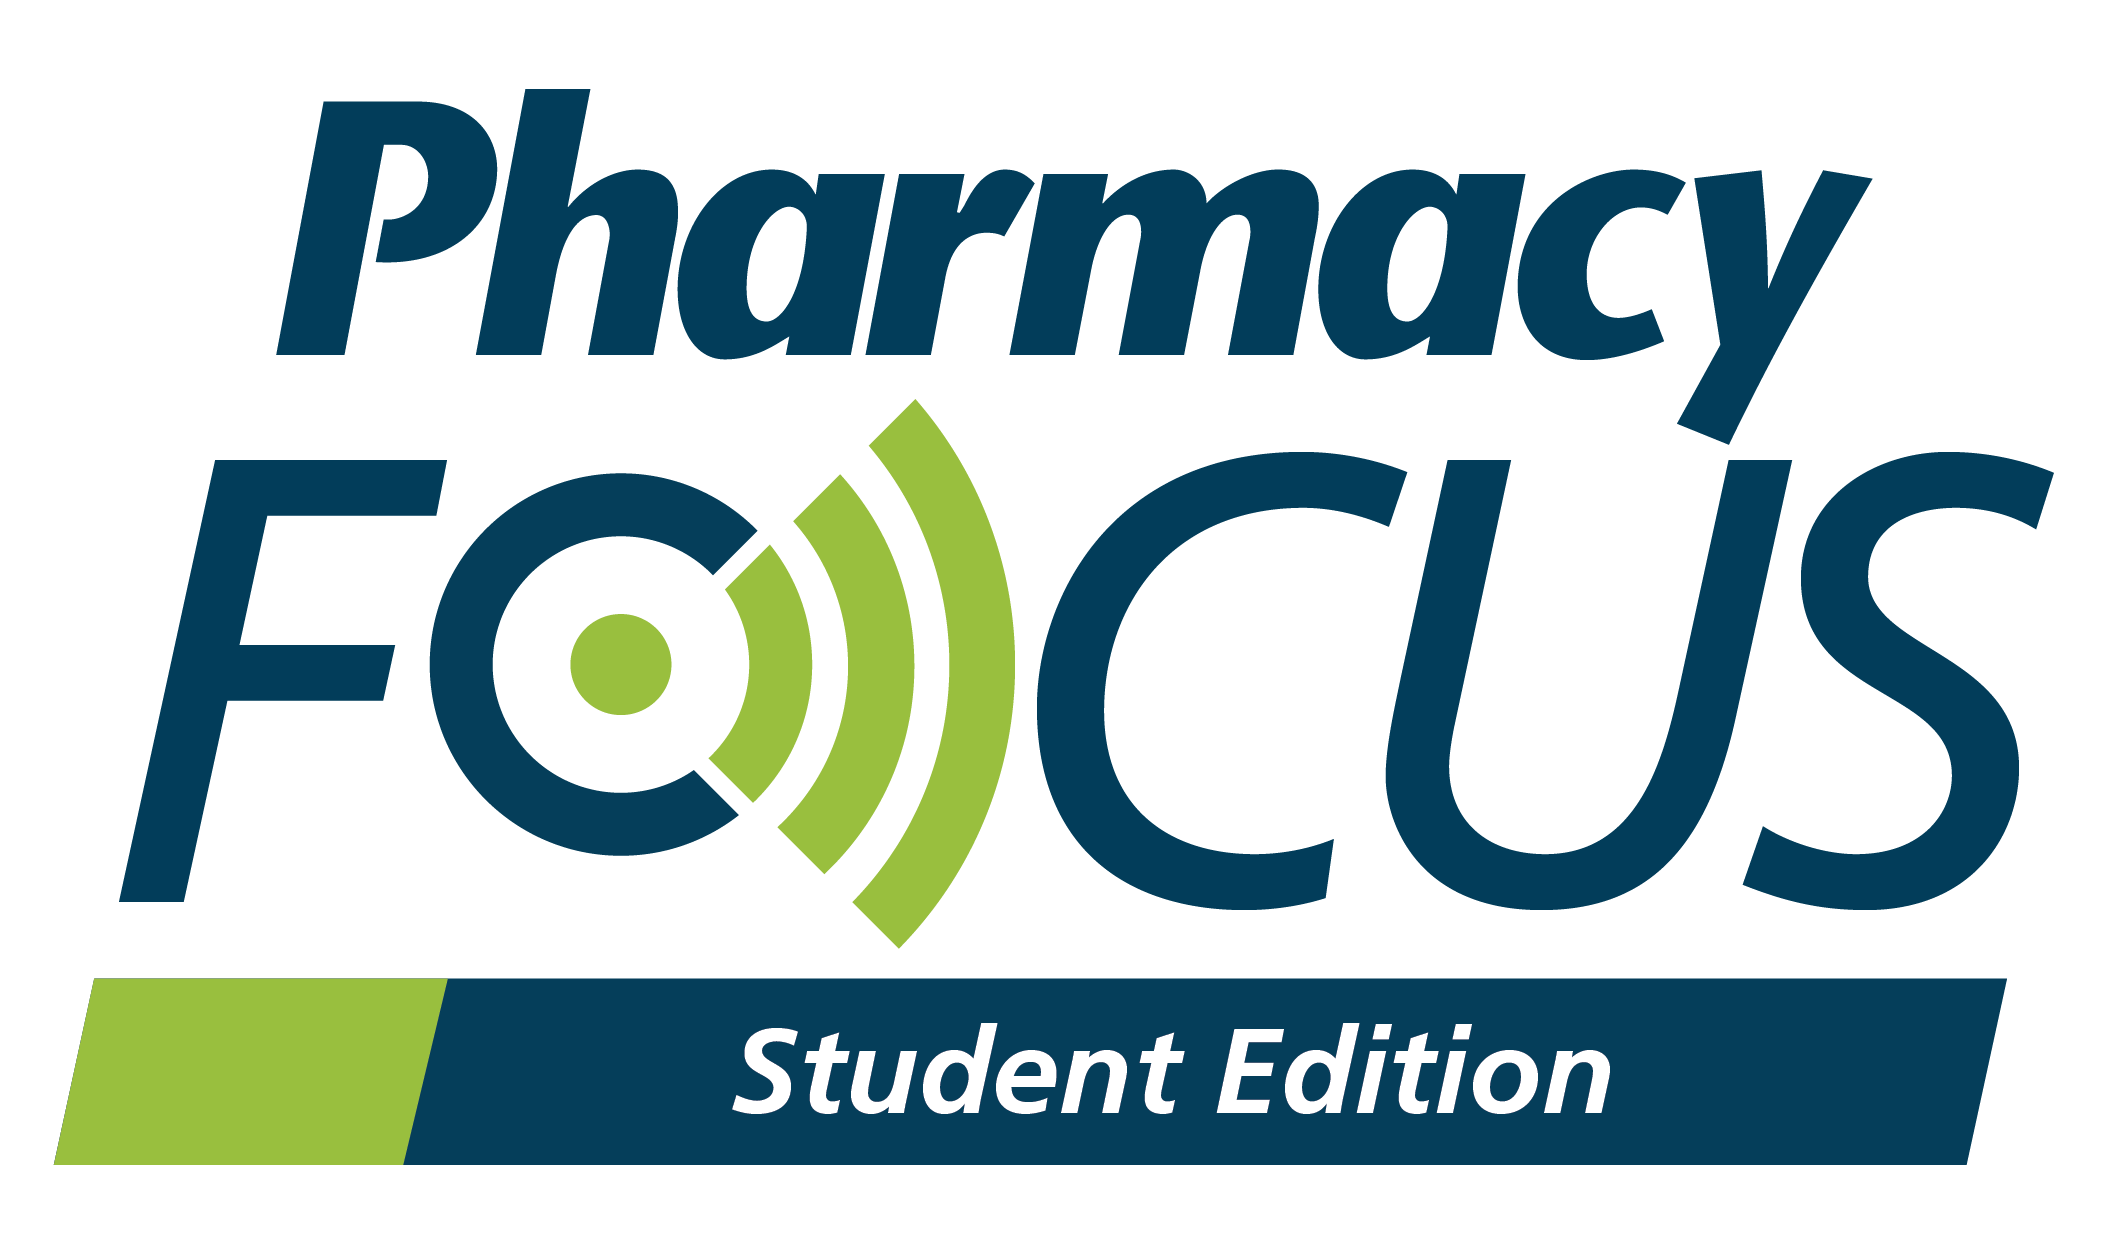 Pharmacy Focus: Student Edition - Episode 6